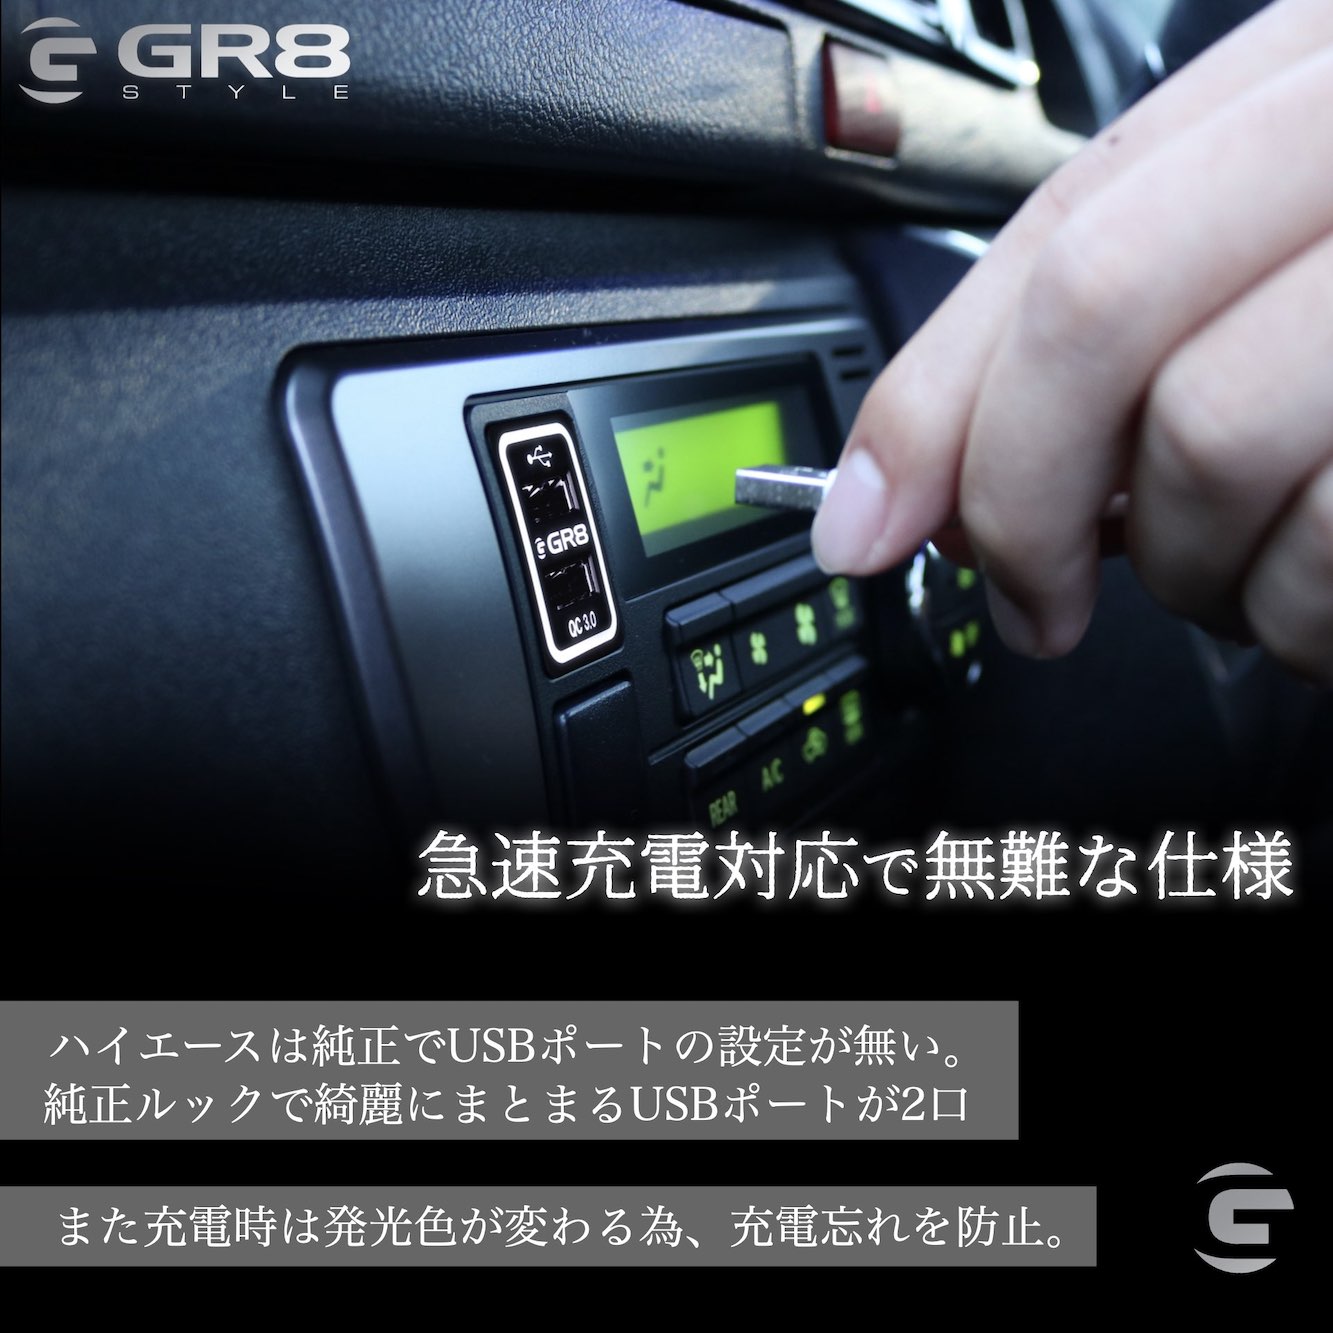 USBスイッチホールカバー – GR8 STYLE ONLINE